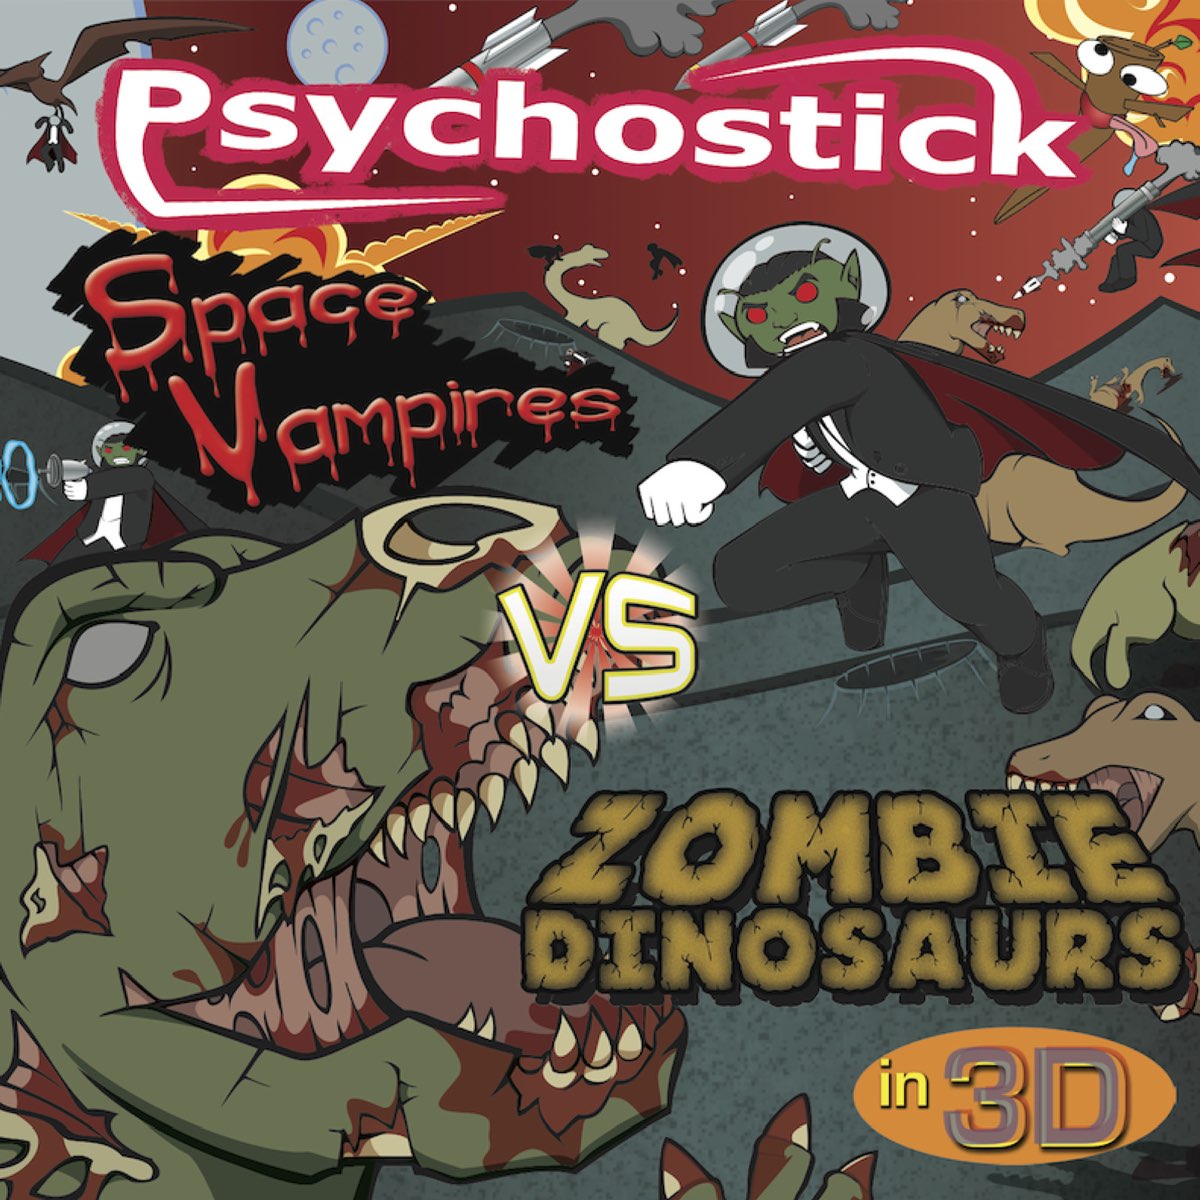 Psychostick - Space Vampires vs Zombie Dinosaurs in 3D (2011)